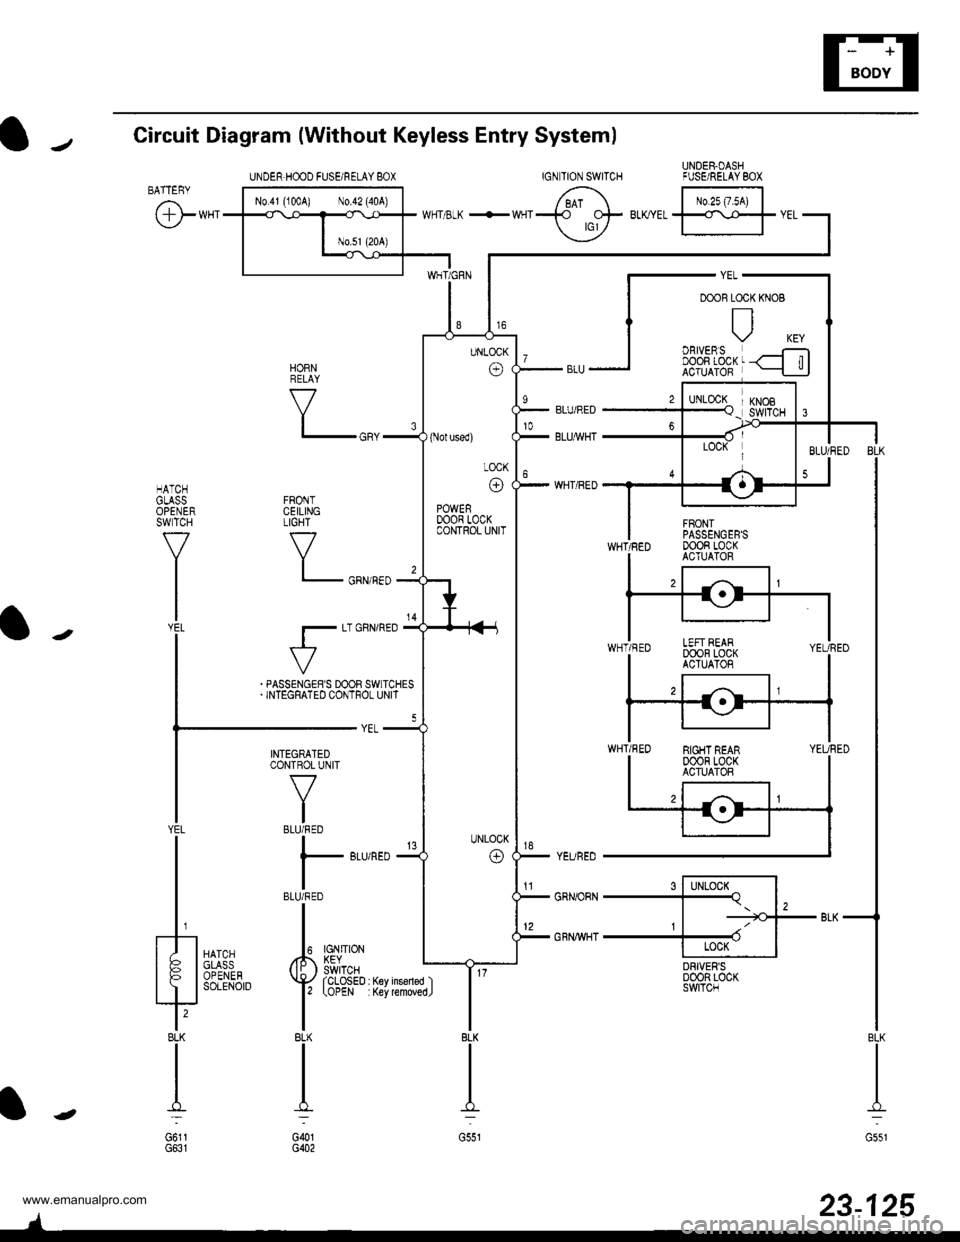 HONDA CR-V 1999 RD1-RD3 / 1.G Workshop Manual 
UNDER-DASHFUSE/RELAYBOX
Circuit Diagram {Without Keyless Entry System)
IGNTION SWITCHBATTEBY
@**
FRONTCEILINGTIGHT
V
l_
r-
HATCHGLASSOPENERSWTCH
f7
I
l-J;
tr| oBtvERsI DOOn LOCKACTUATOR
s l-lLocx^l